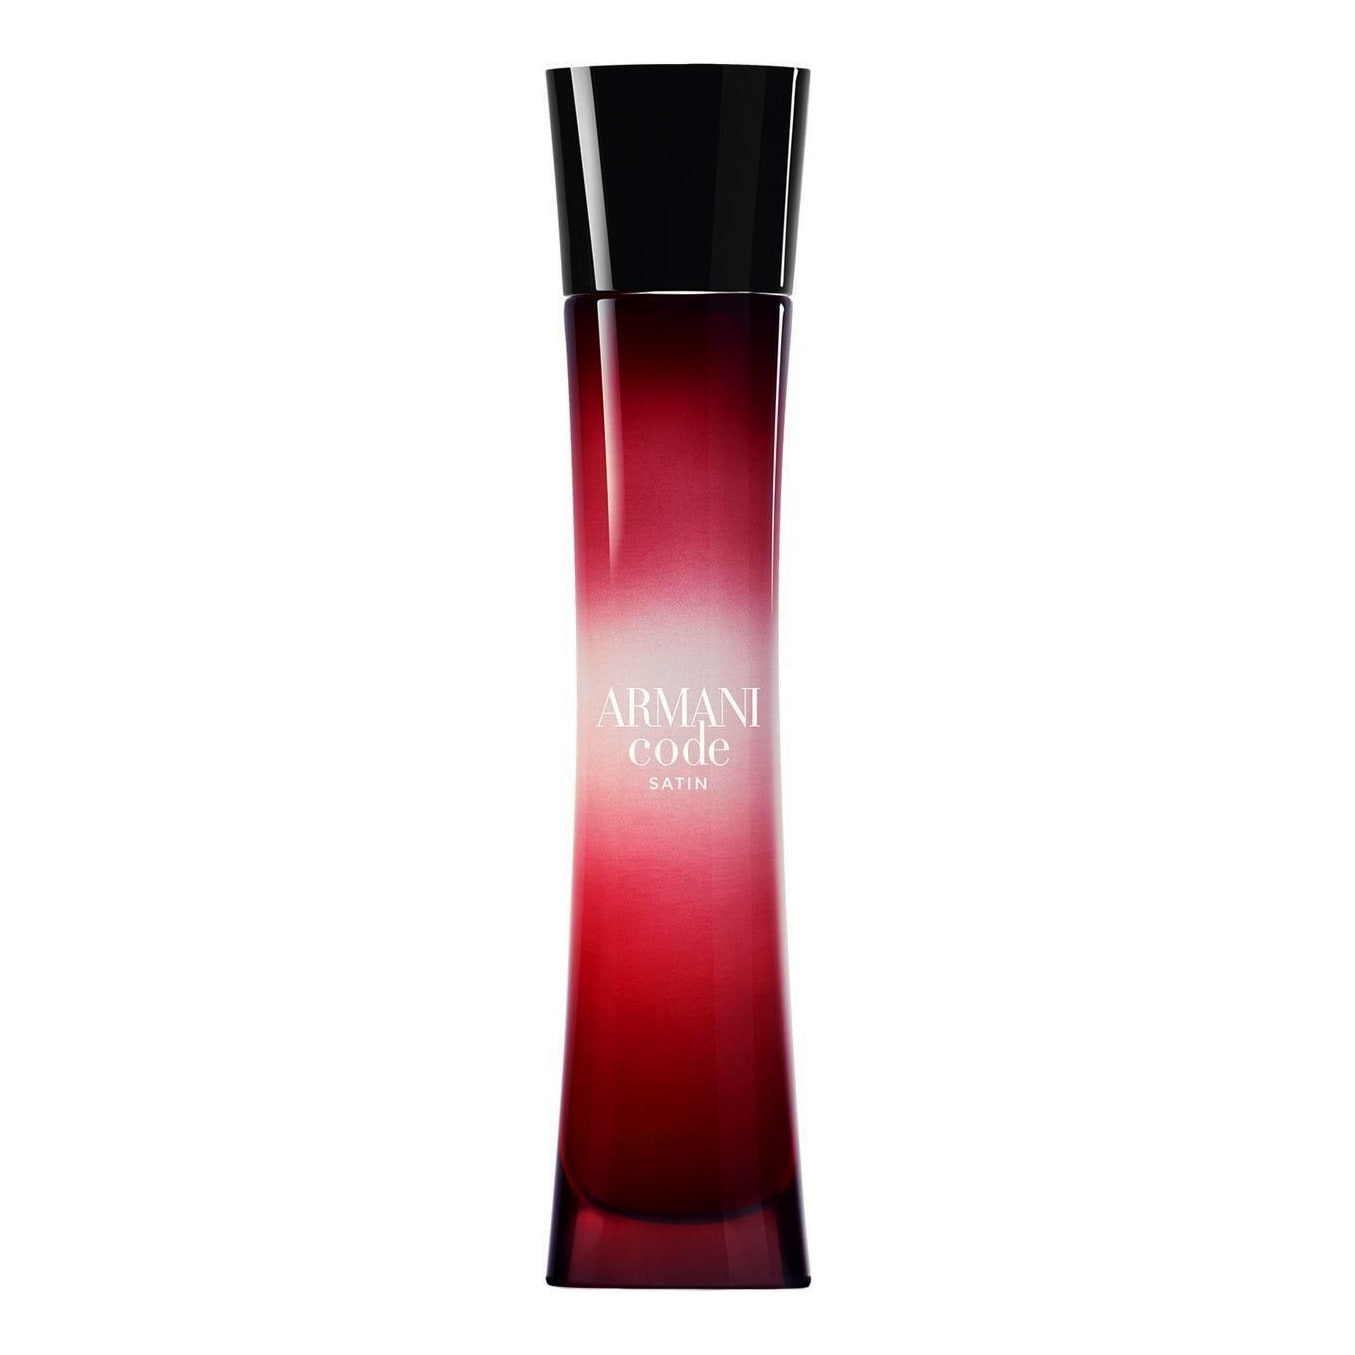 Armani woman. Armani code. Armani code Perfume. Giorgio Armani code Satin. Armani code женский аромат.